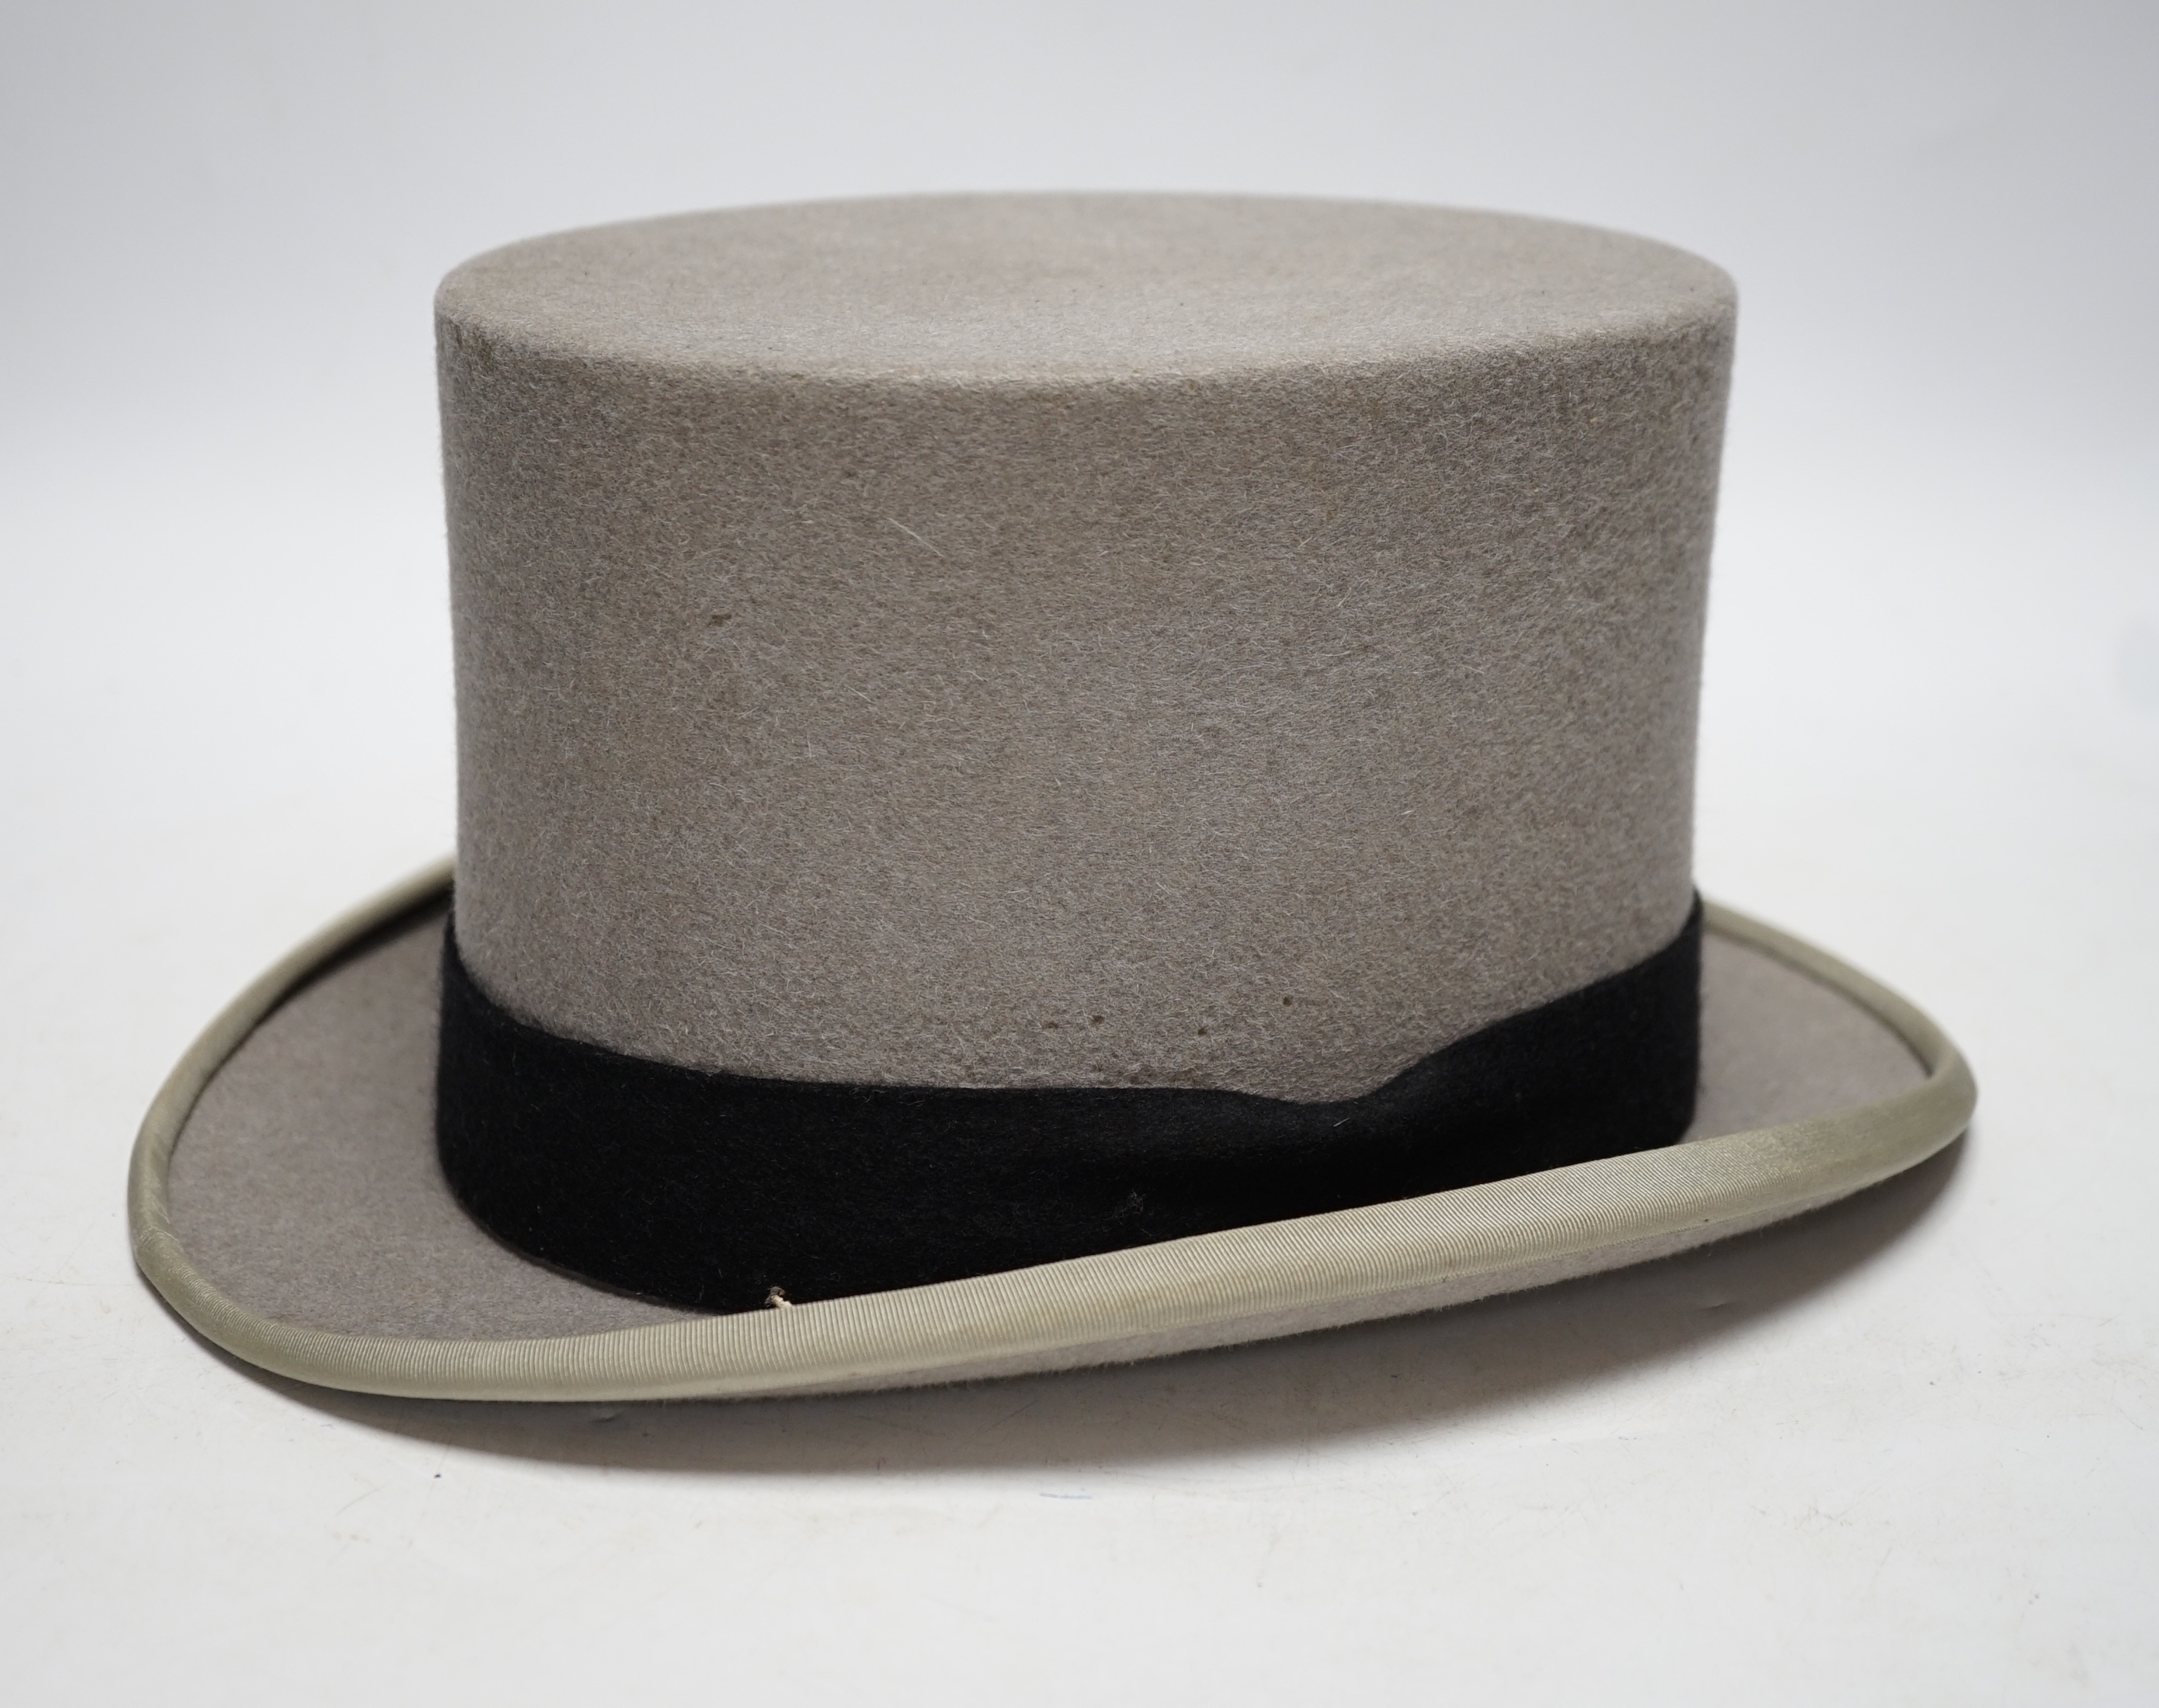 A Moss Bros grey top hat in Harrods box